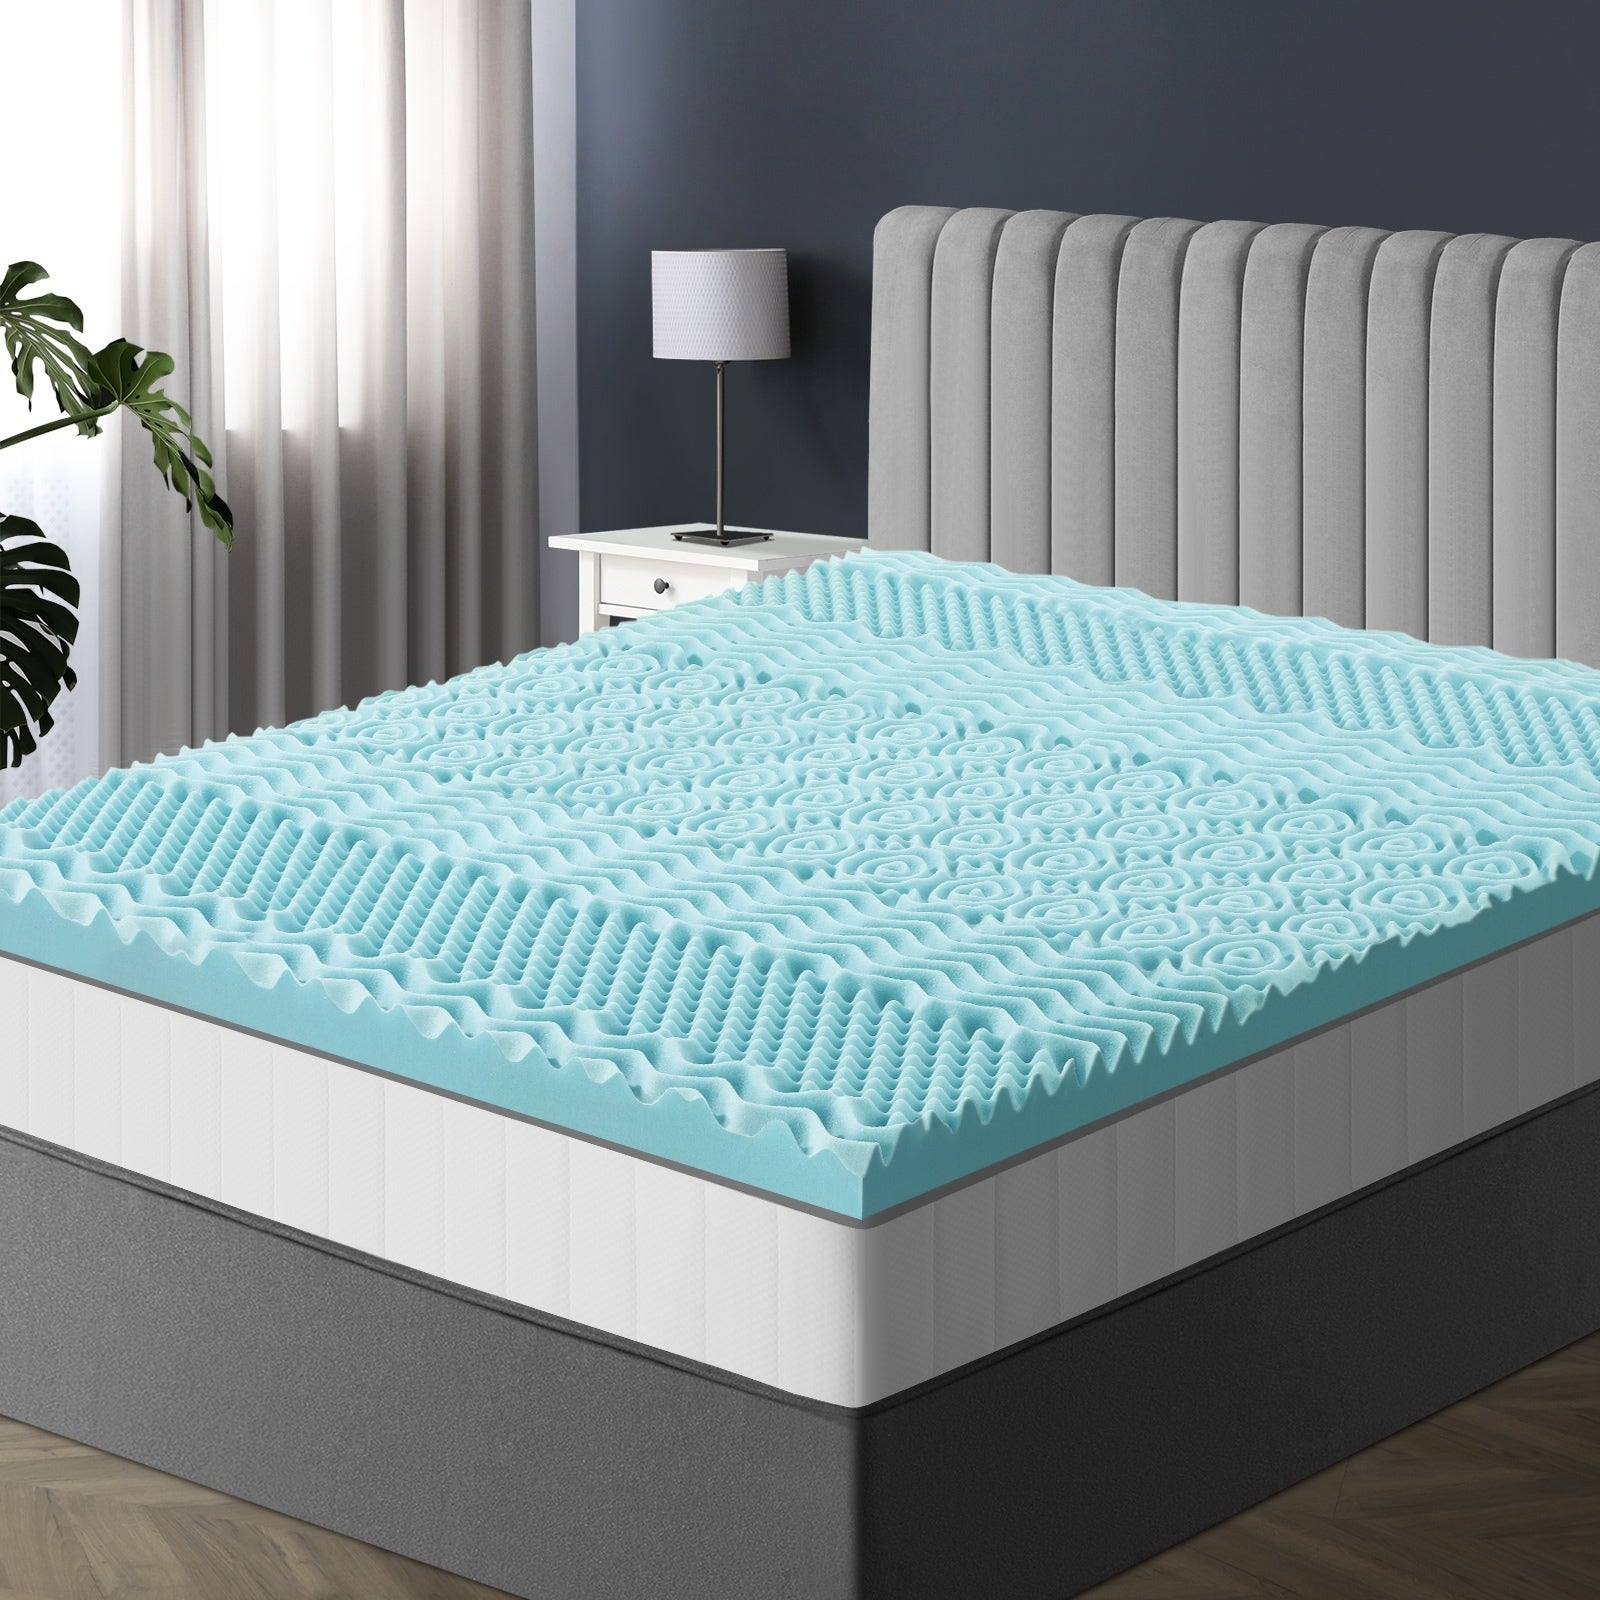 Bedra Double Memory Foam Mattress Topper Cool Gel Bed Bamboo Cover 7-Zone 8CM